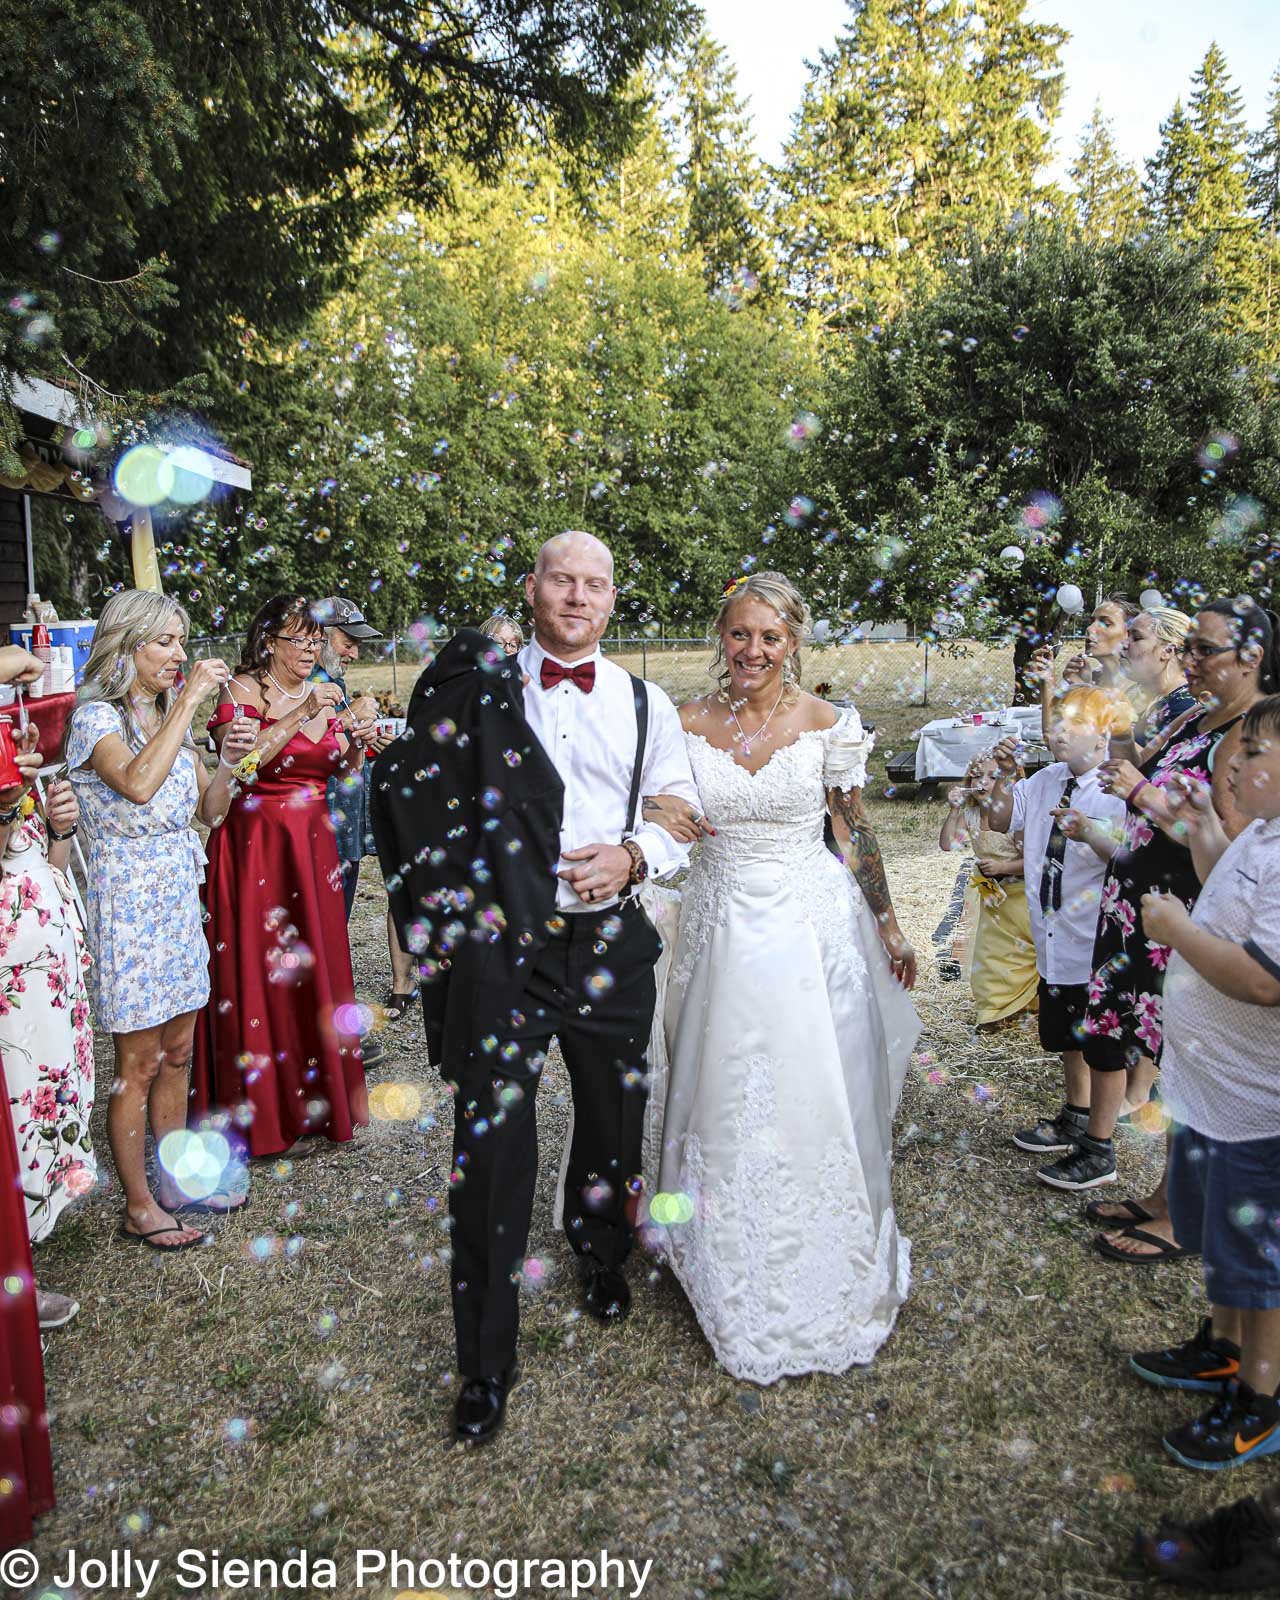 Wedding bubbles by Jolly Sienda Photography